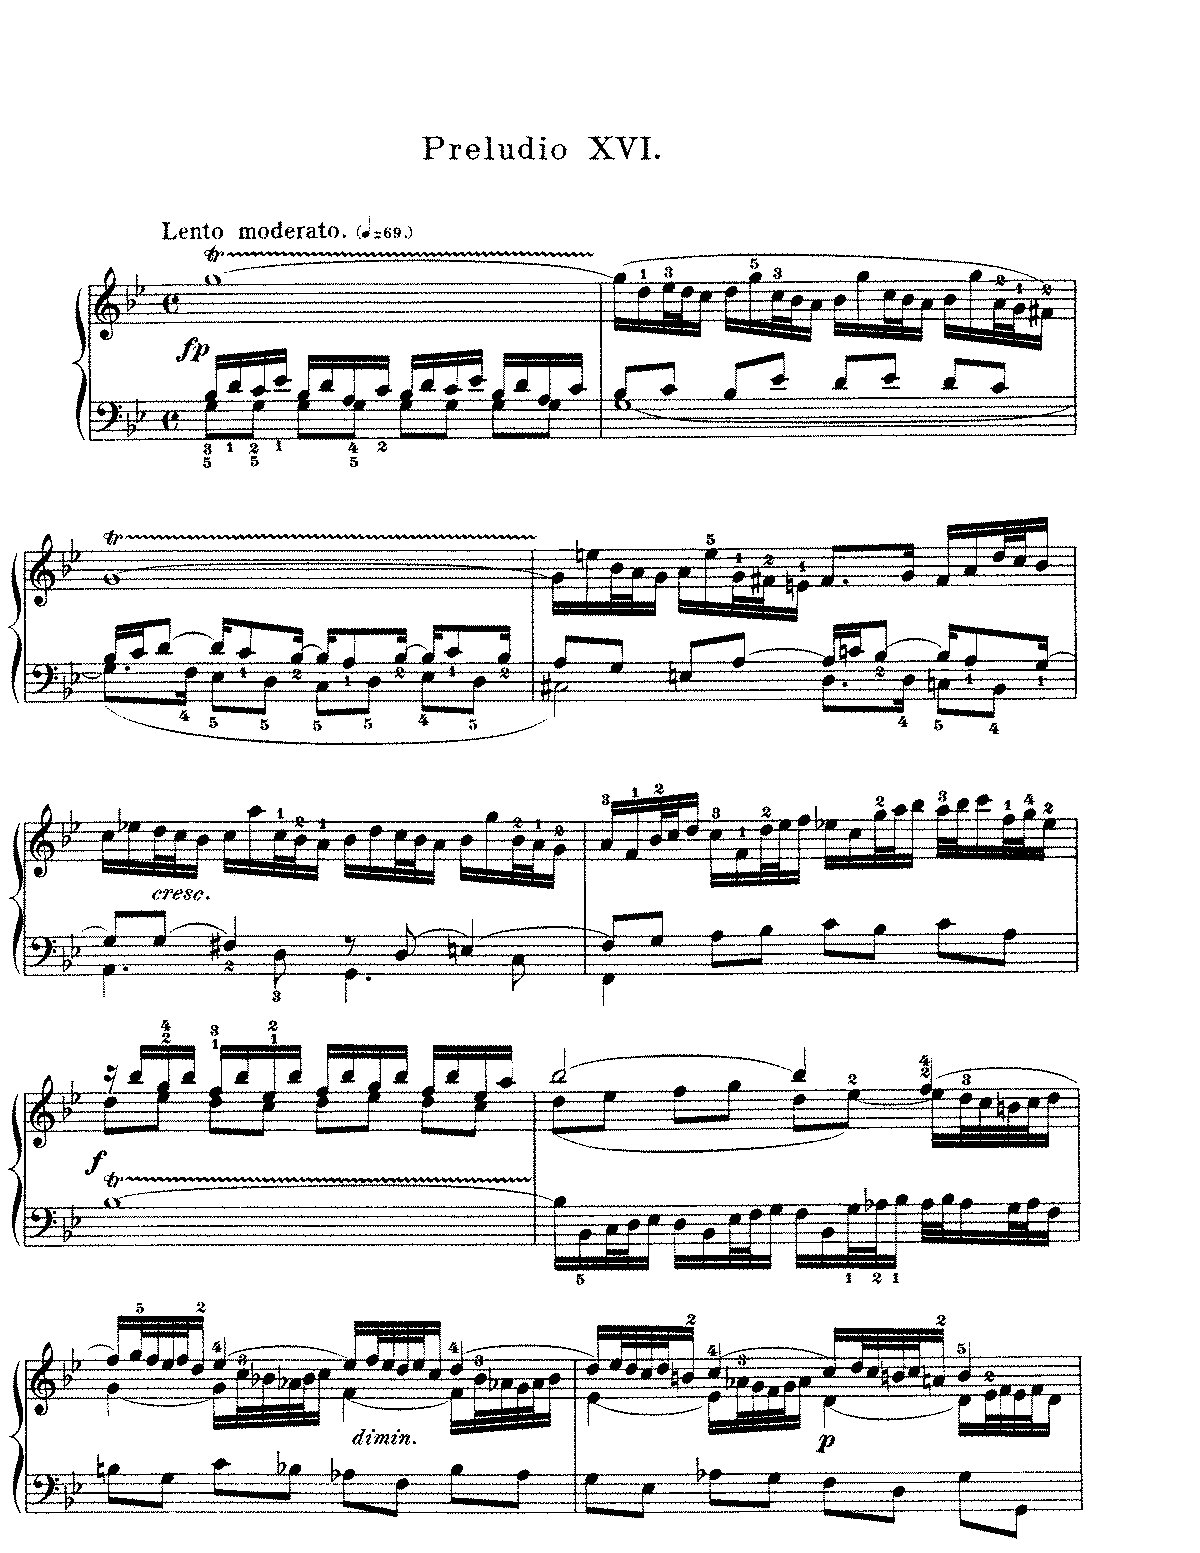 Prelude and Fugue in G minor, BWV 861 (Bach, Johann Sebastian) - IMSLP ...